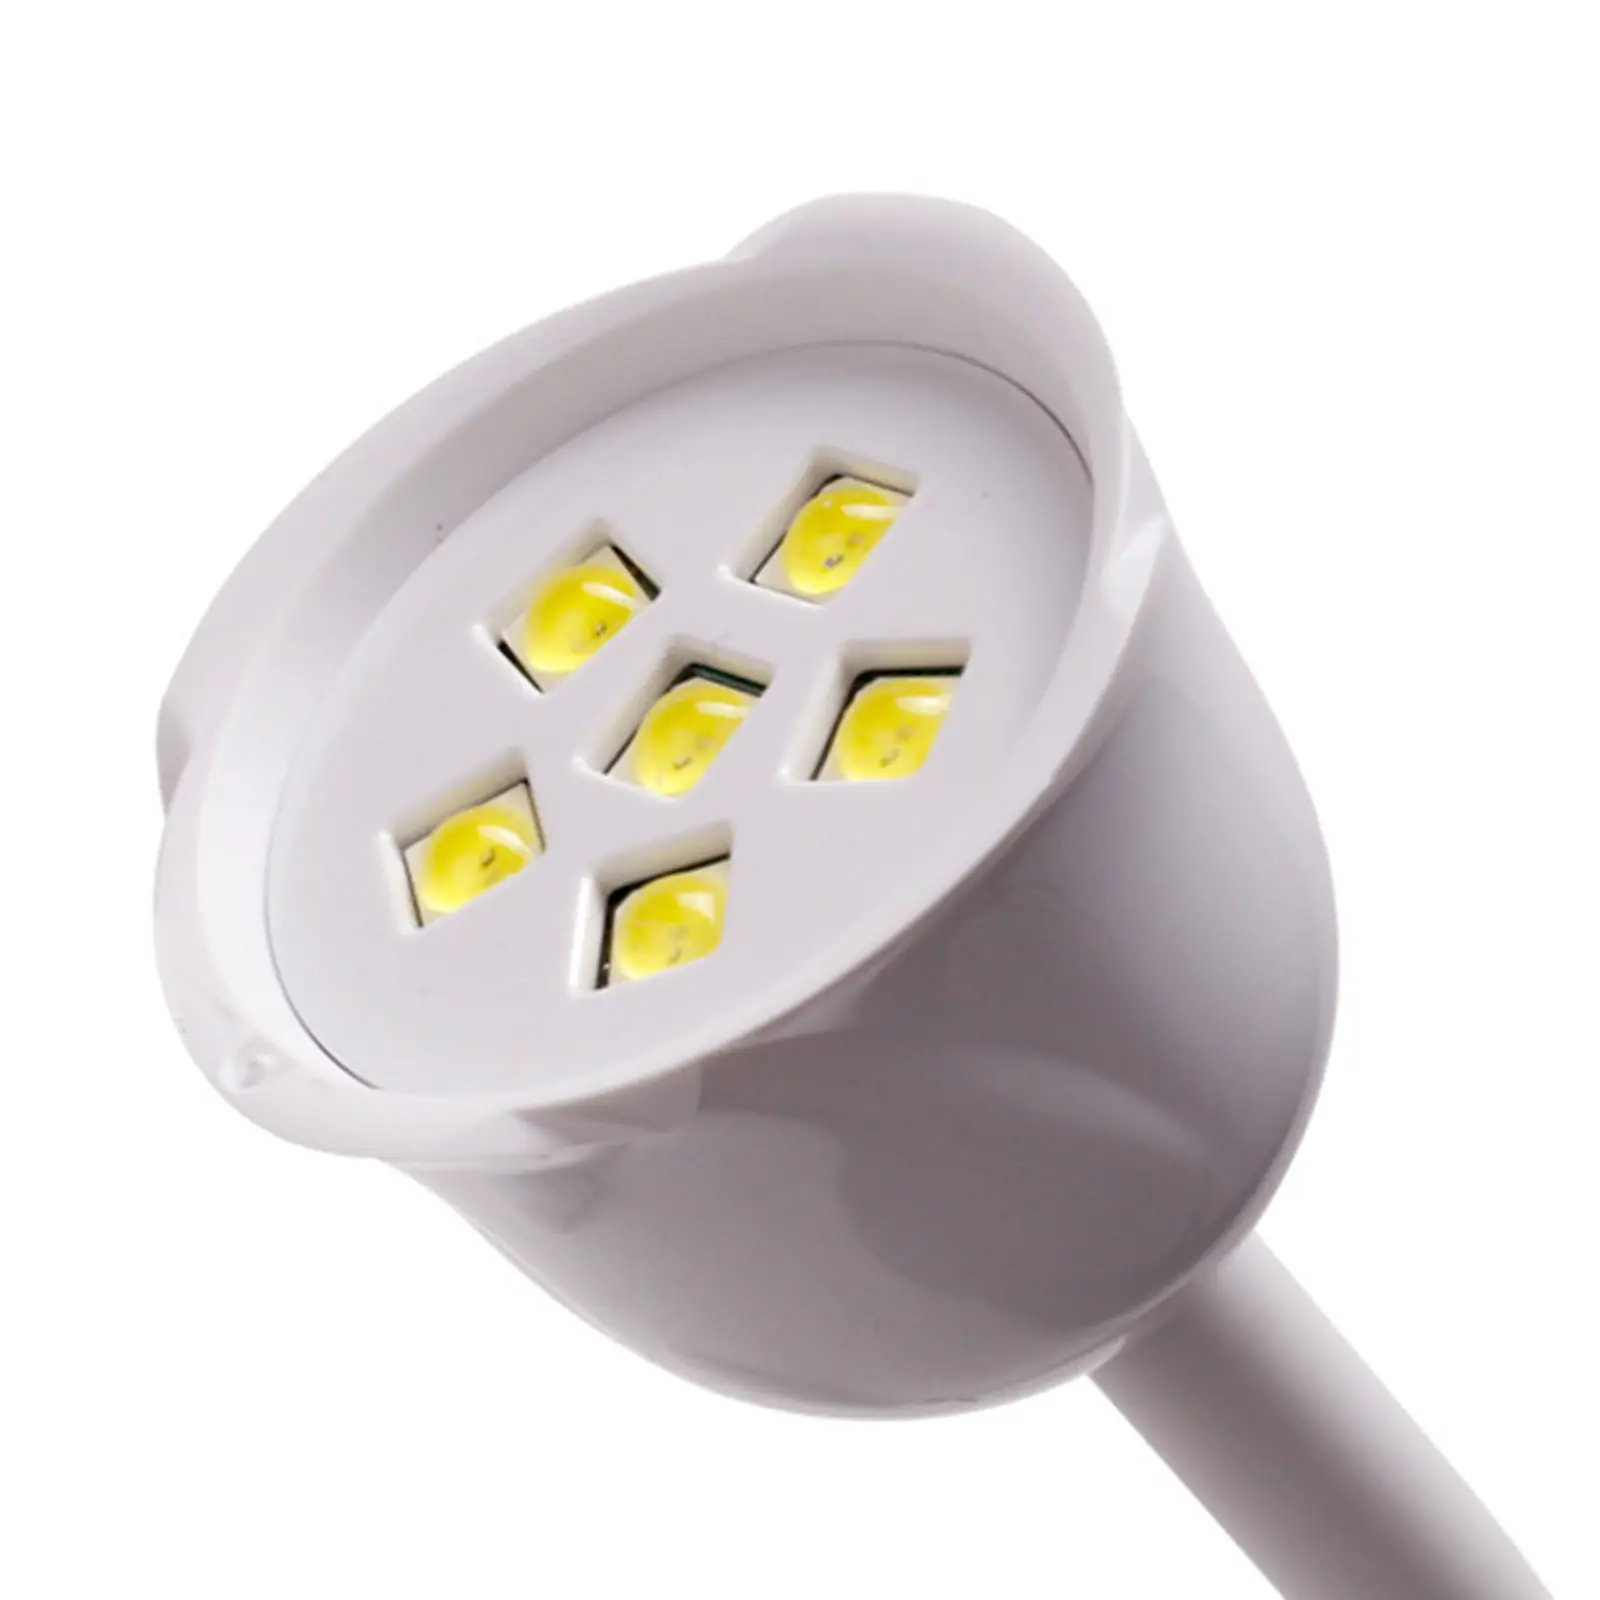 LED Nail Lamp, Professional Nail Dryer for Gel Polish Fits Fingernail Toenail, Nail Light Gel Lamp for Home and Salon Use